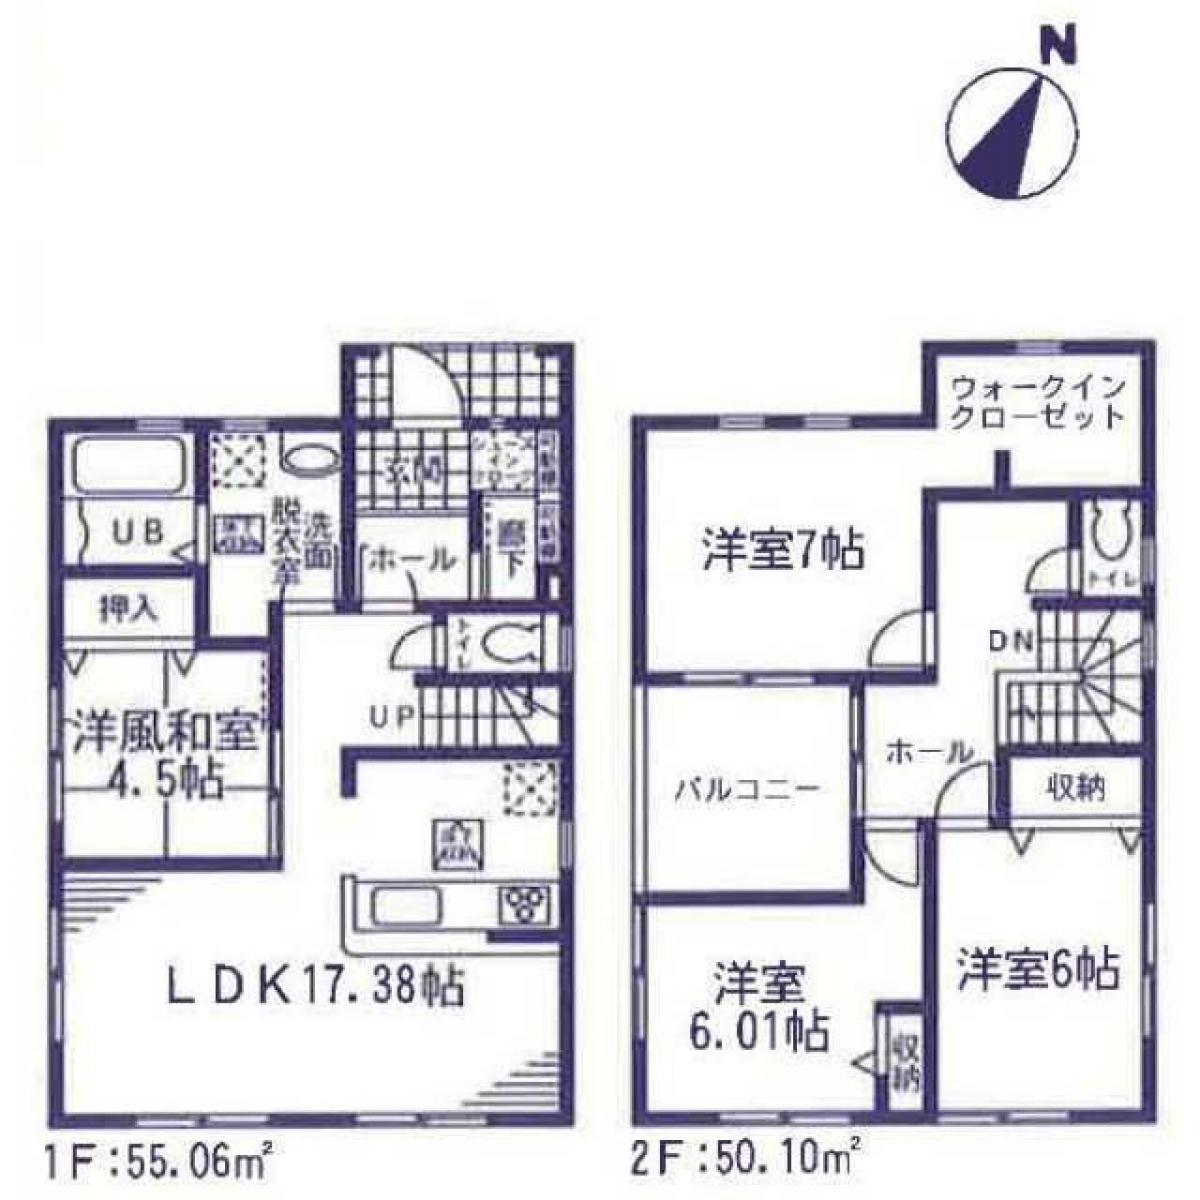 Picture of Home For Sale in Tsuchiura Shi, Ibaraki, Japan